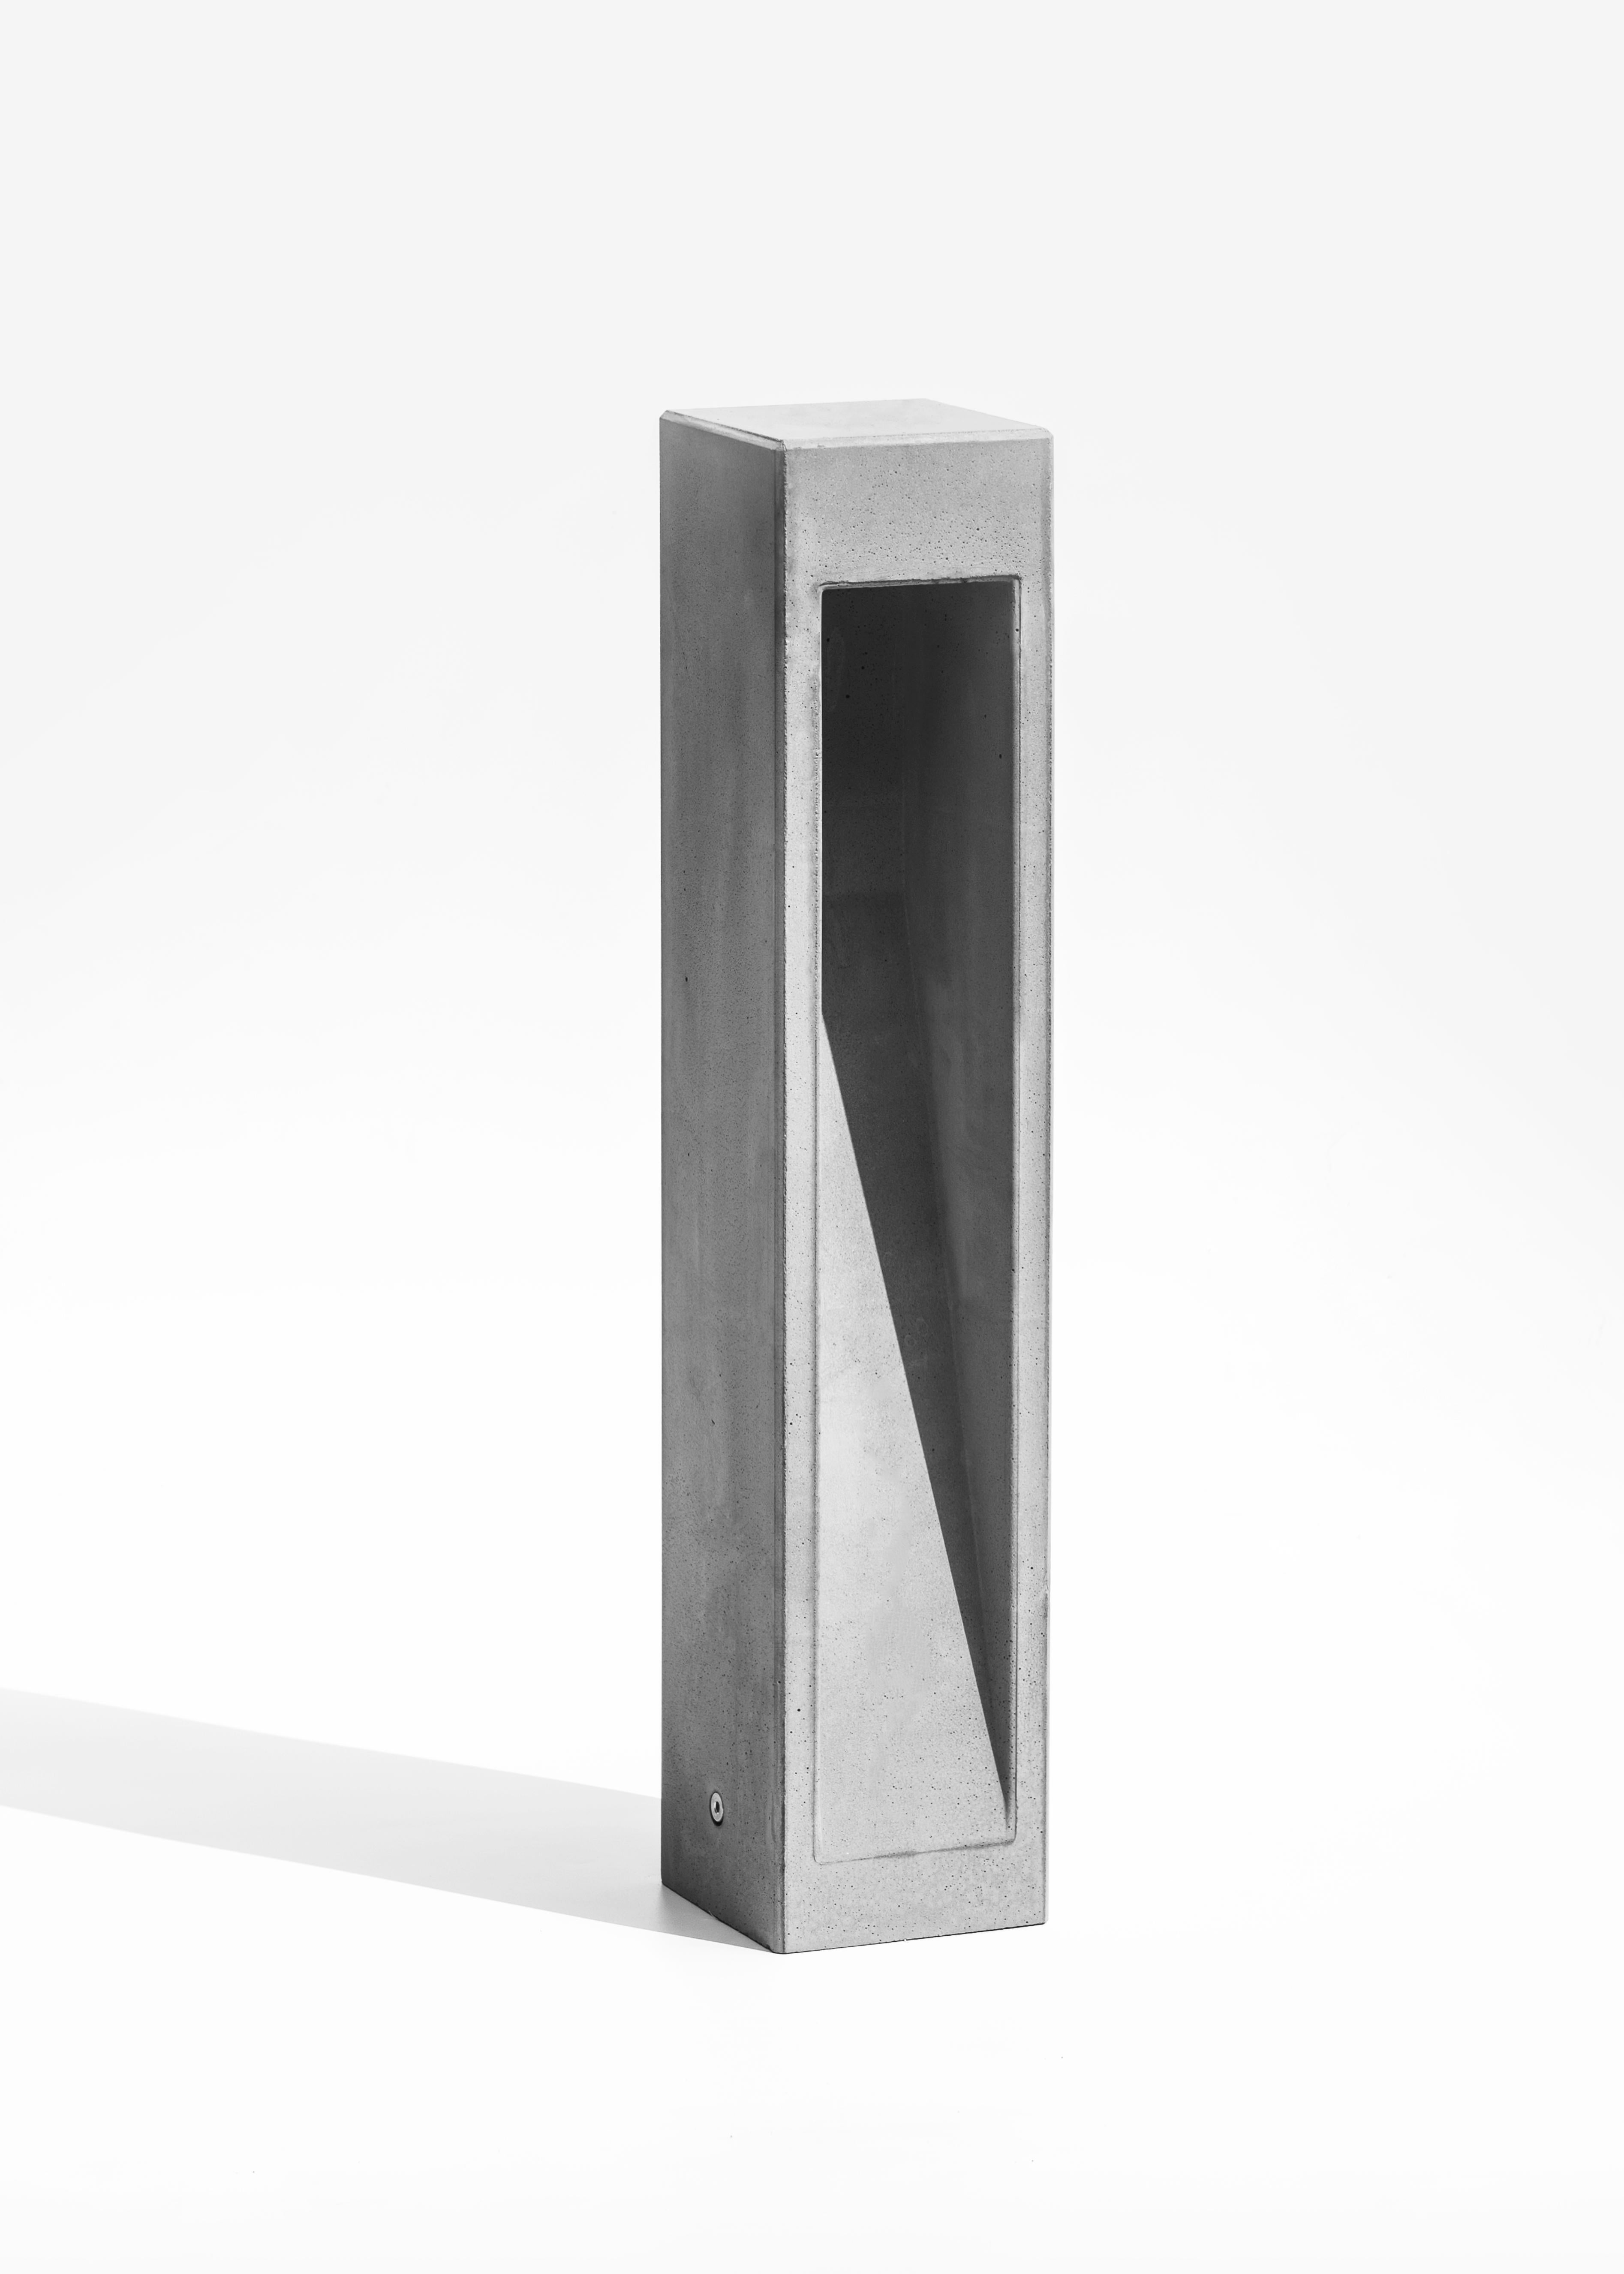 Cube (L)
Concrete floor lamp by Bentu Design
Measures: 120 ×120 × H 600mm
AC LED 295lm 3000K 85 90° 